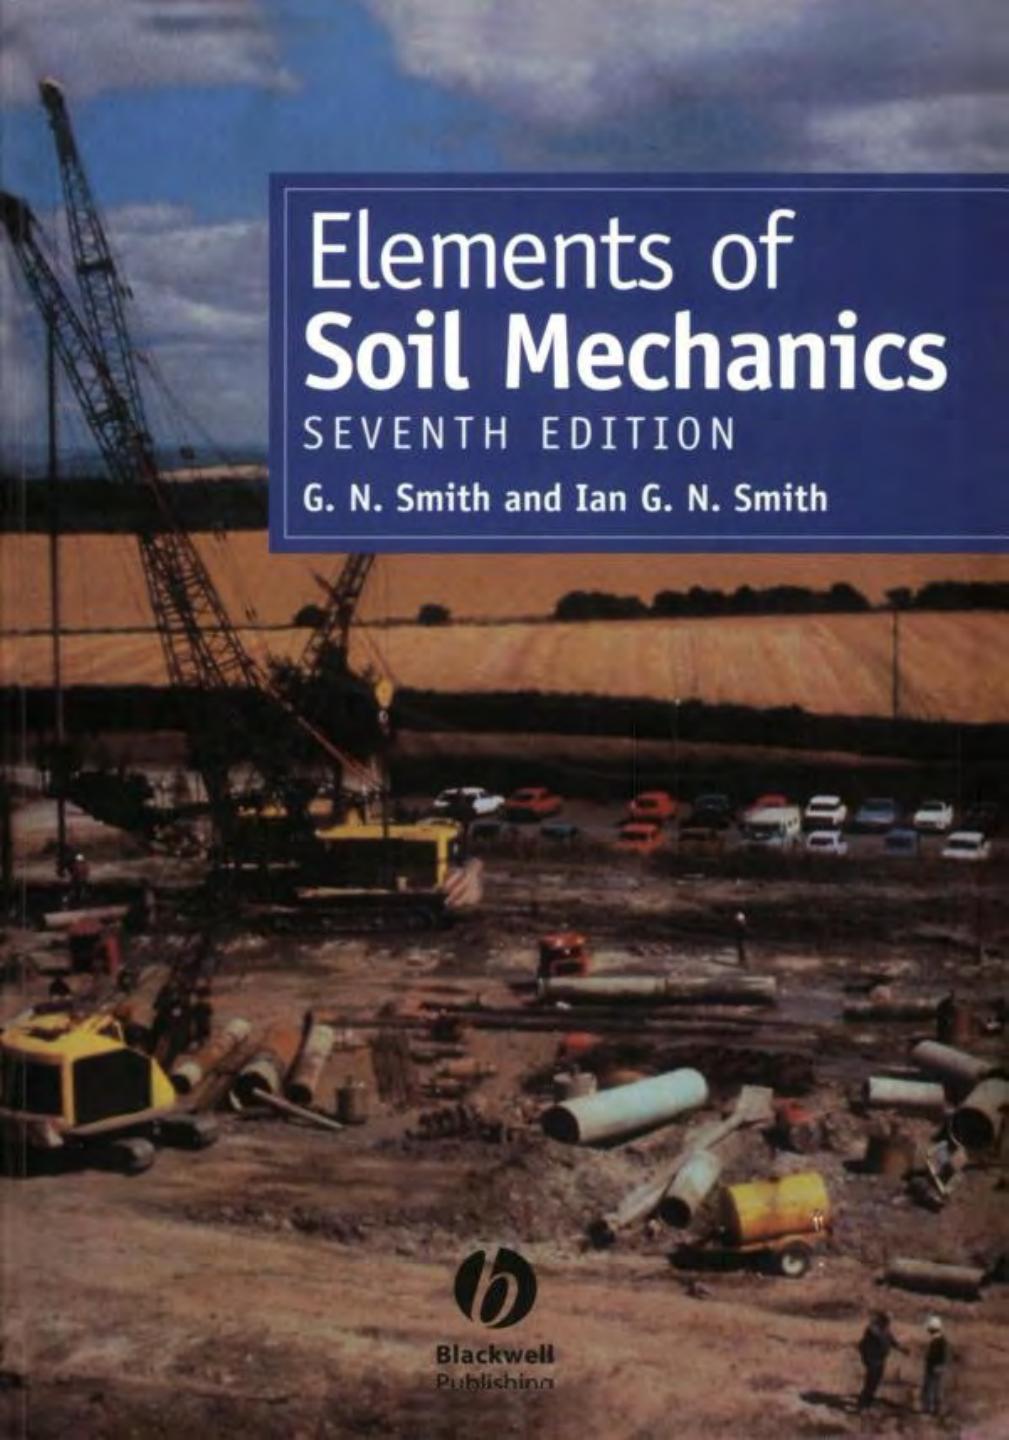 Elements of Soil Mechanics. 7th Edition 1998